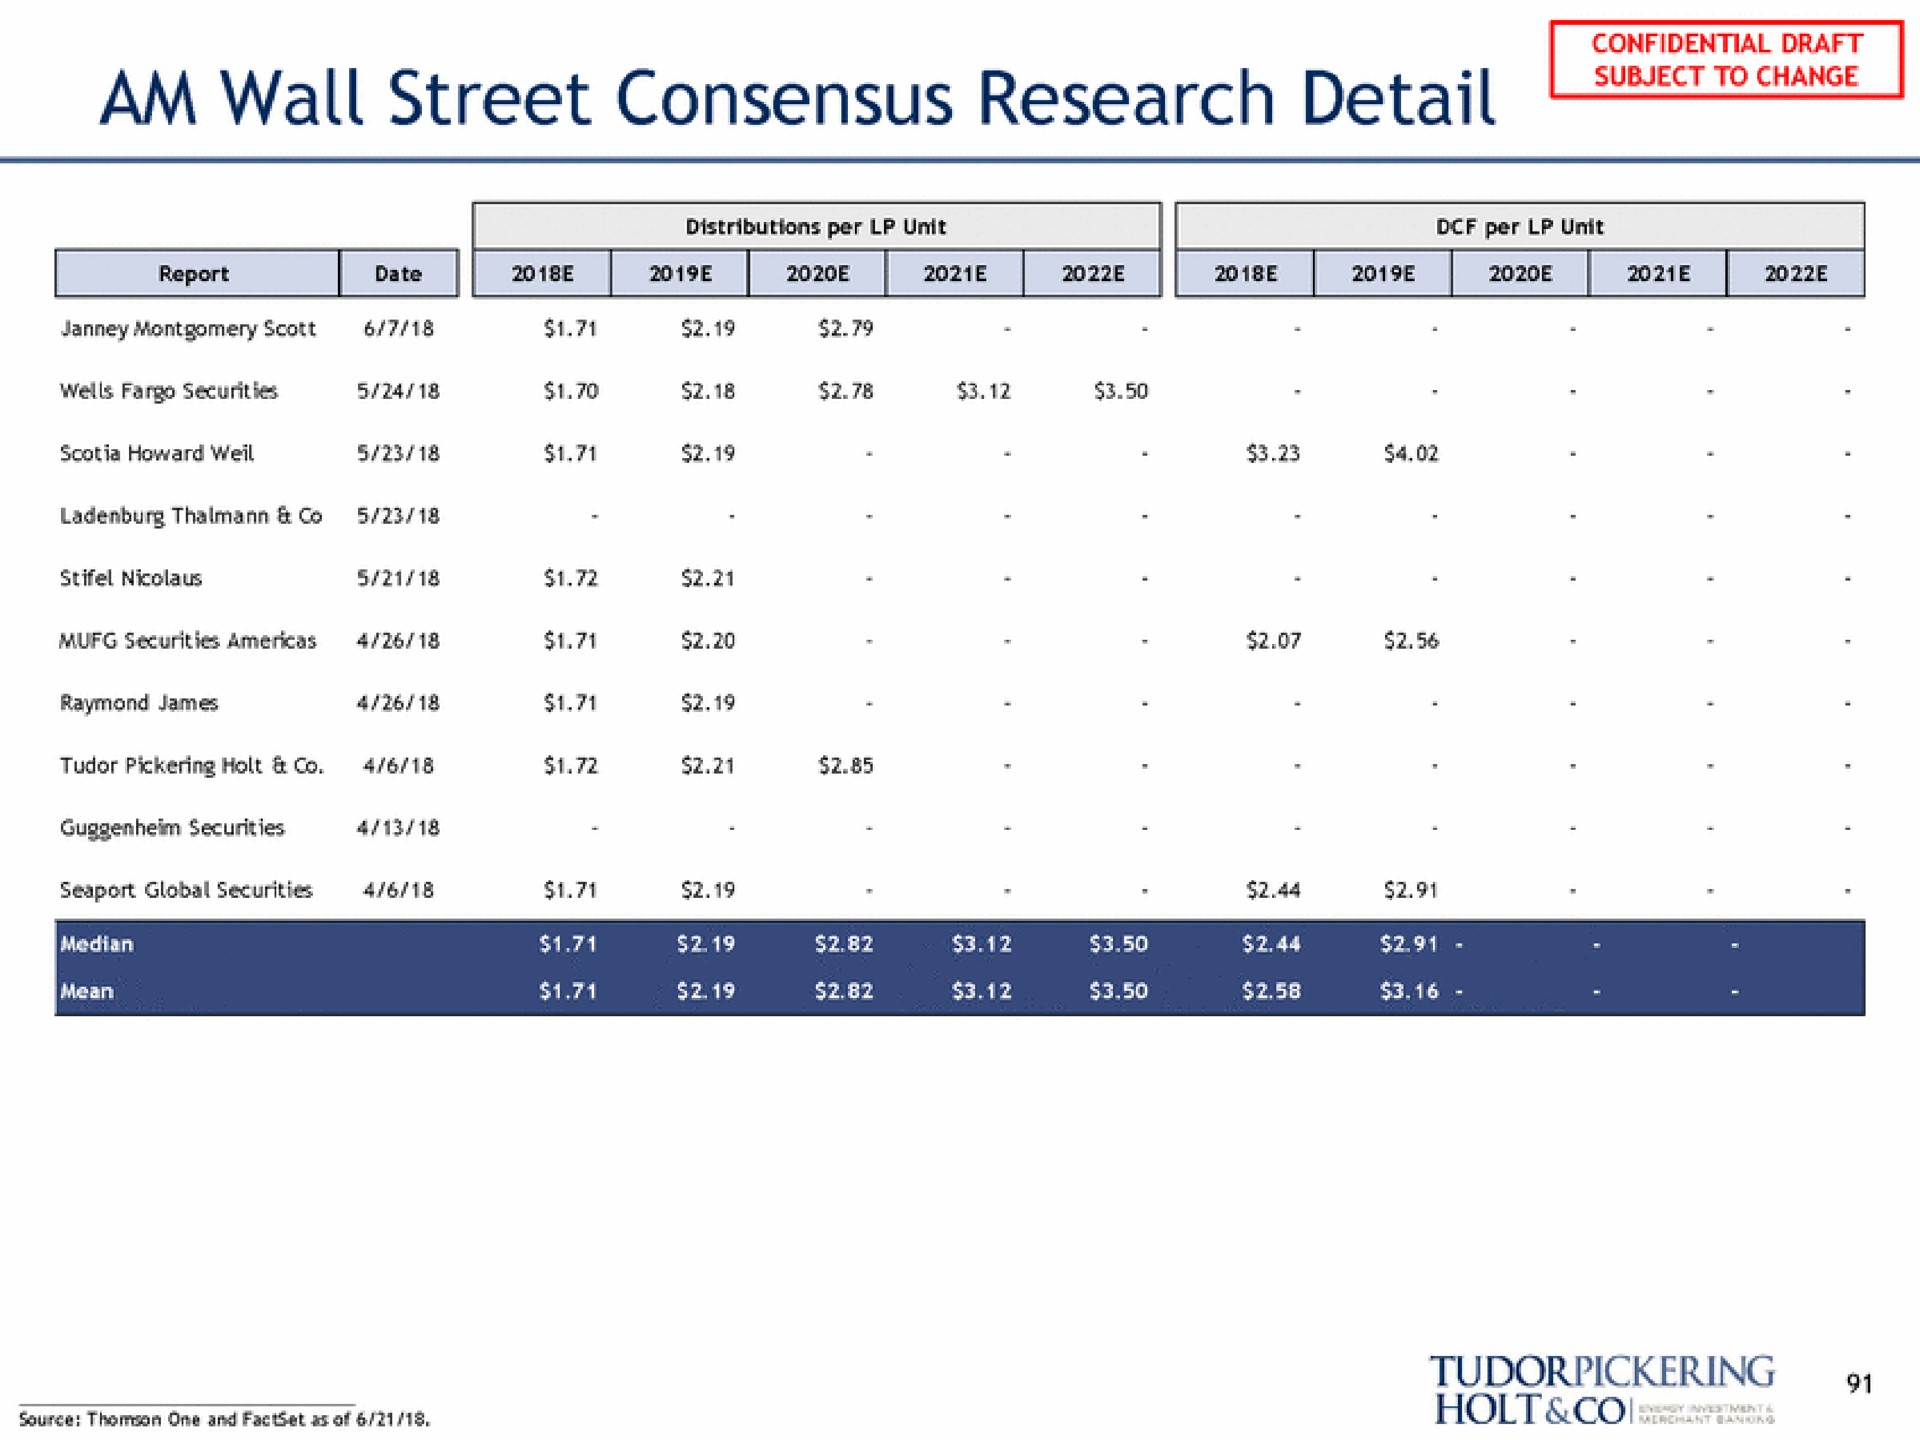 am wall street consensus research detail distributions per unit | Tudor, Pickering, Holt & Co